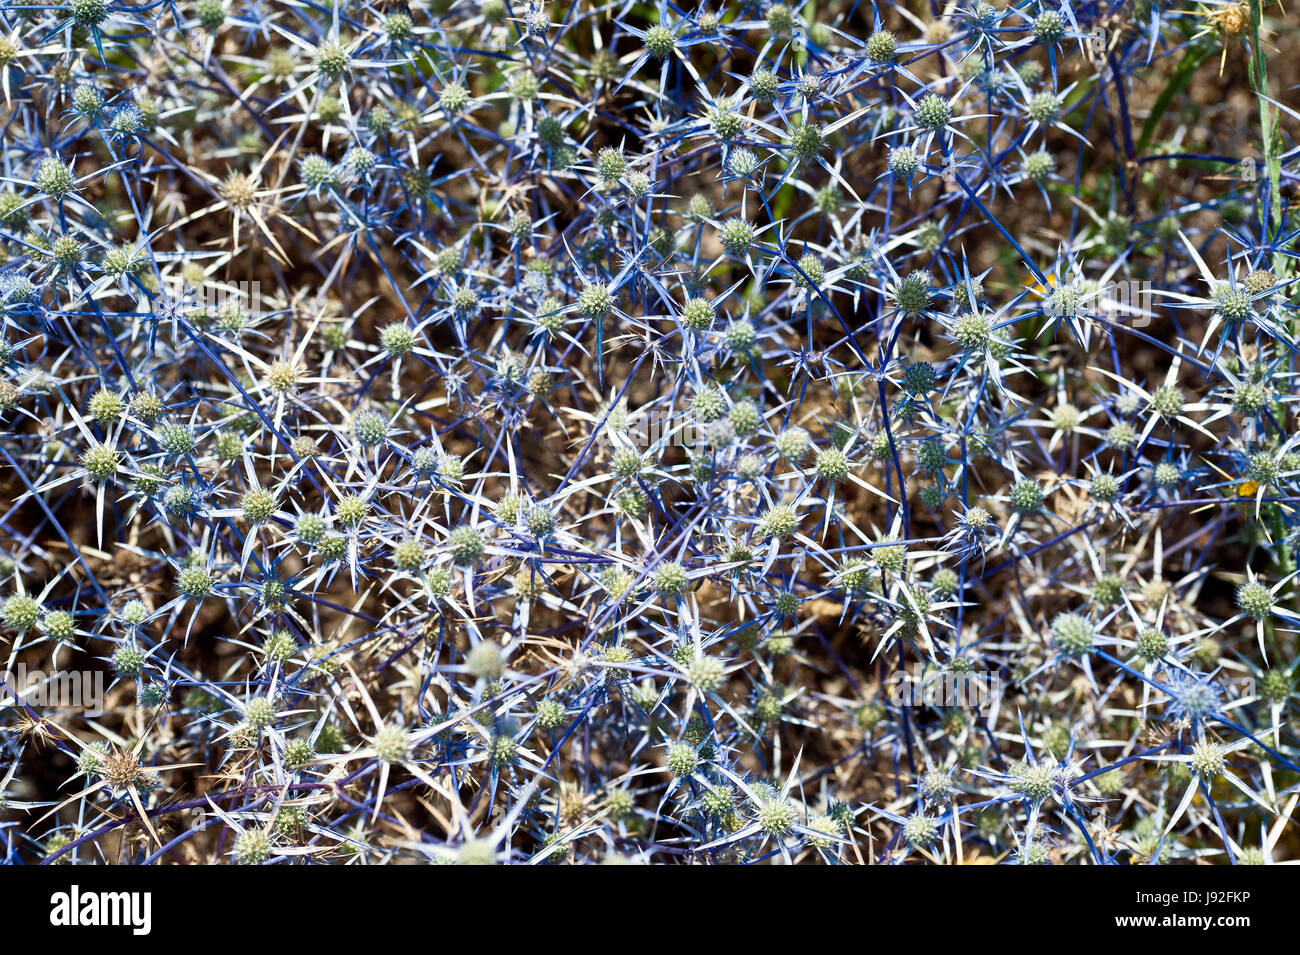 blue, flora, botany, prickle, thorns, thistle, prickly, thistles, plant, Stock Photo